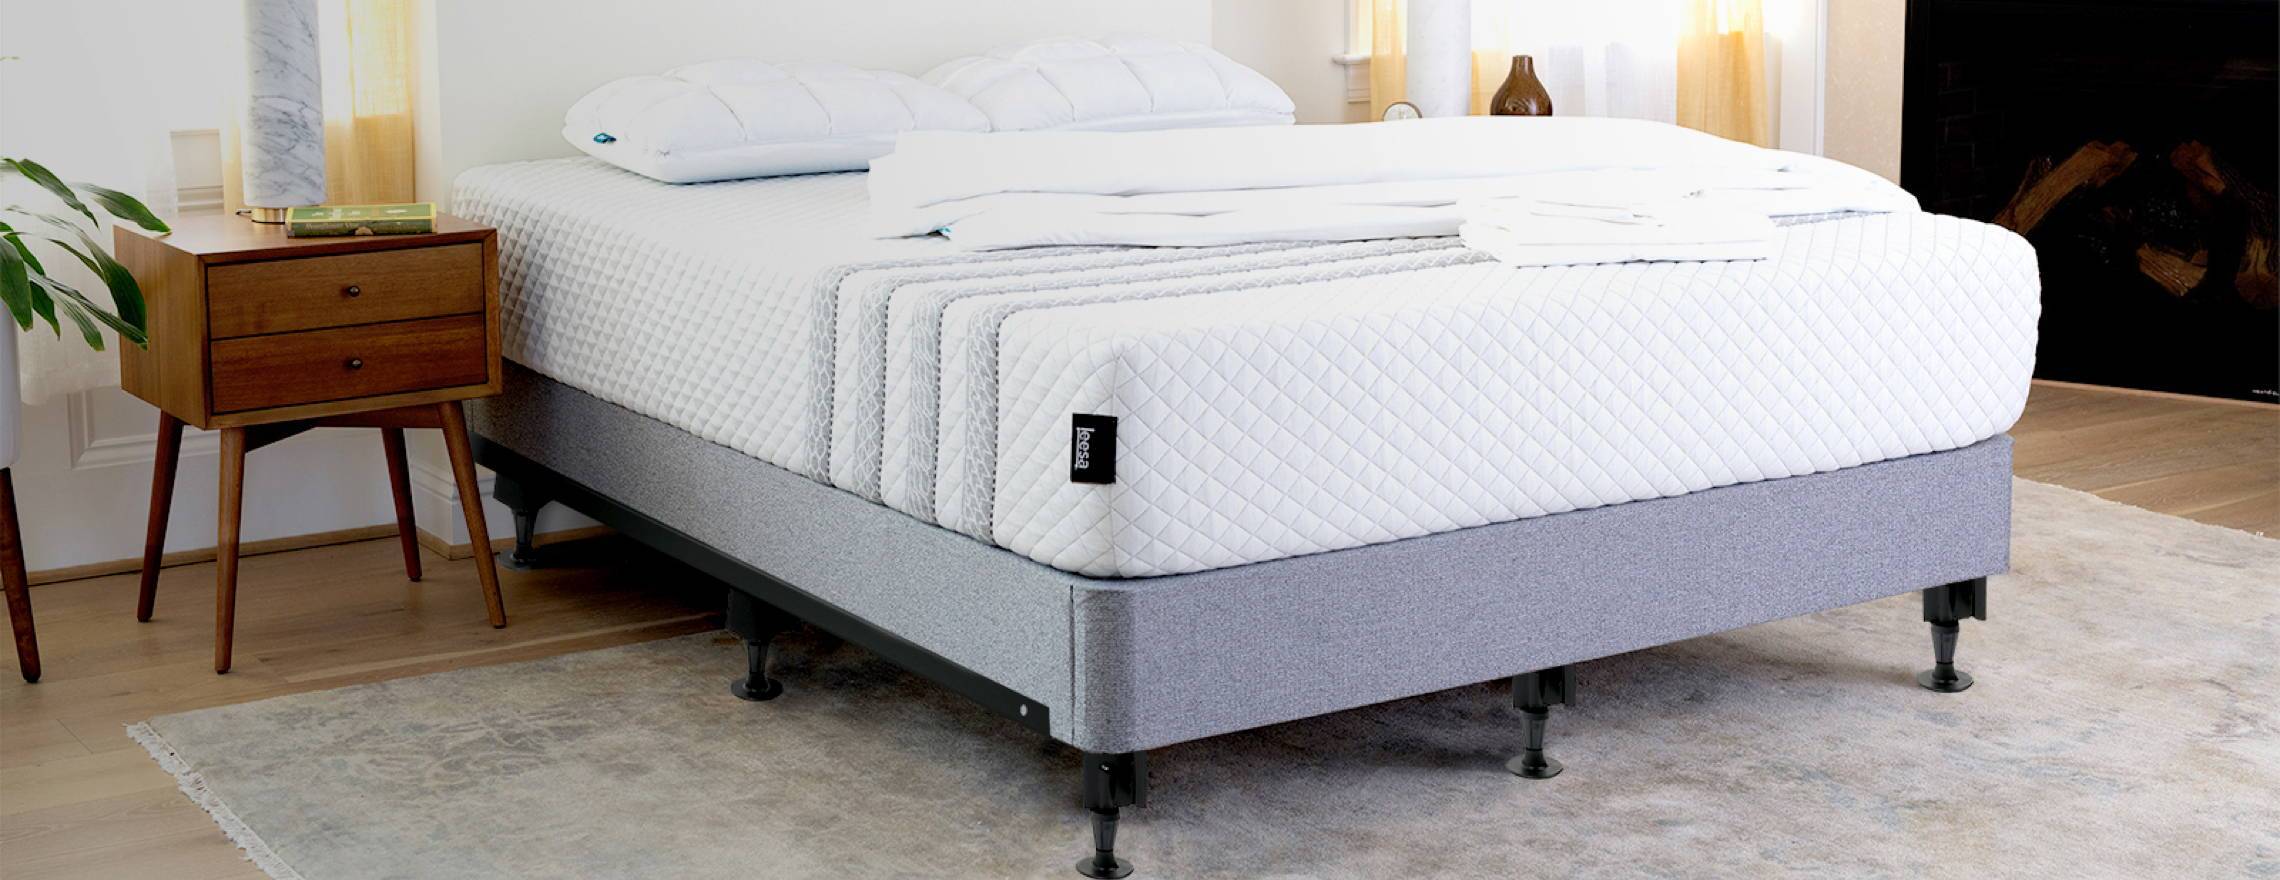 Hybrid Mattress, Does Box Spring Make Bed More Comfortable